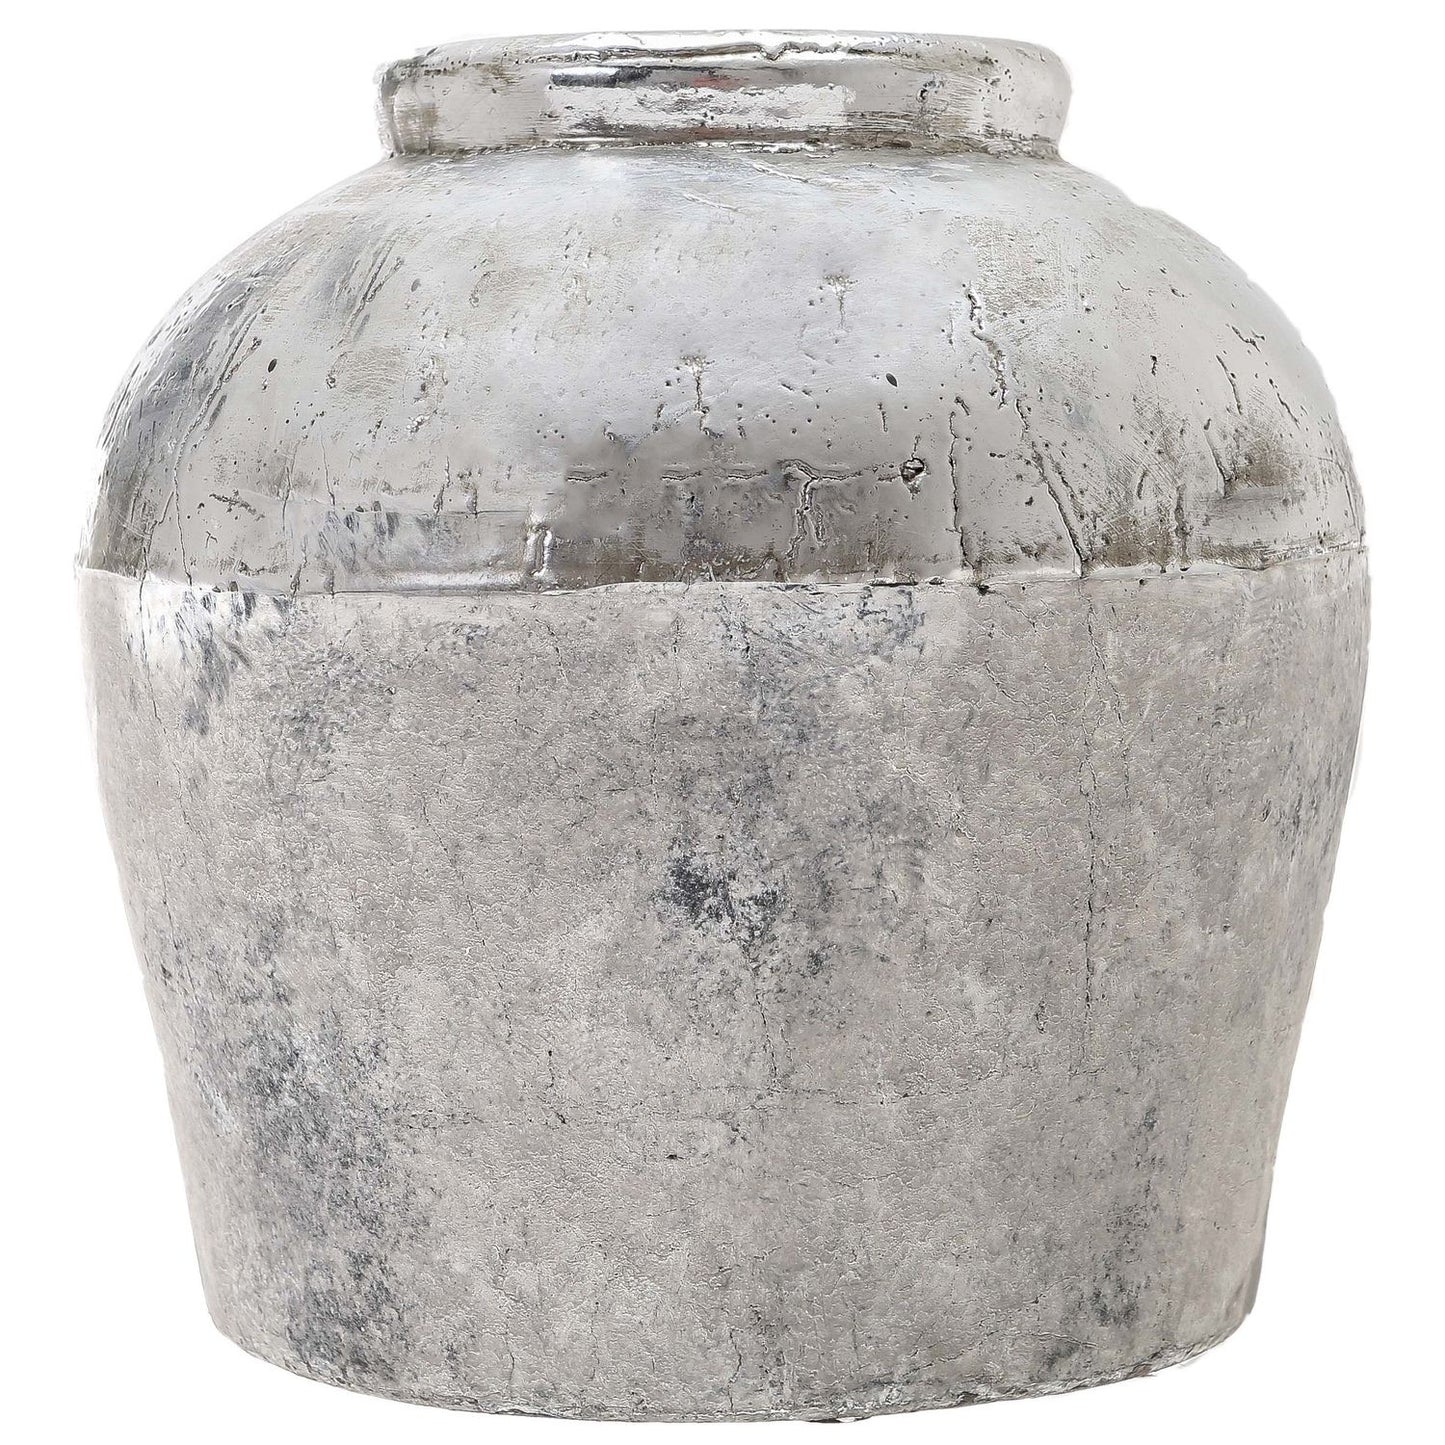 Metallic Two-Tone Silver Ceramic Vase with Vintage Distressed Finish 36cm